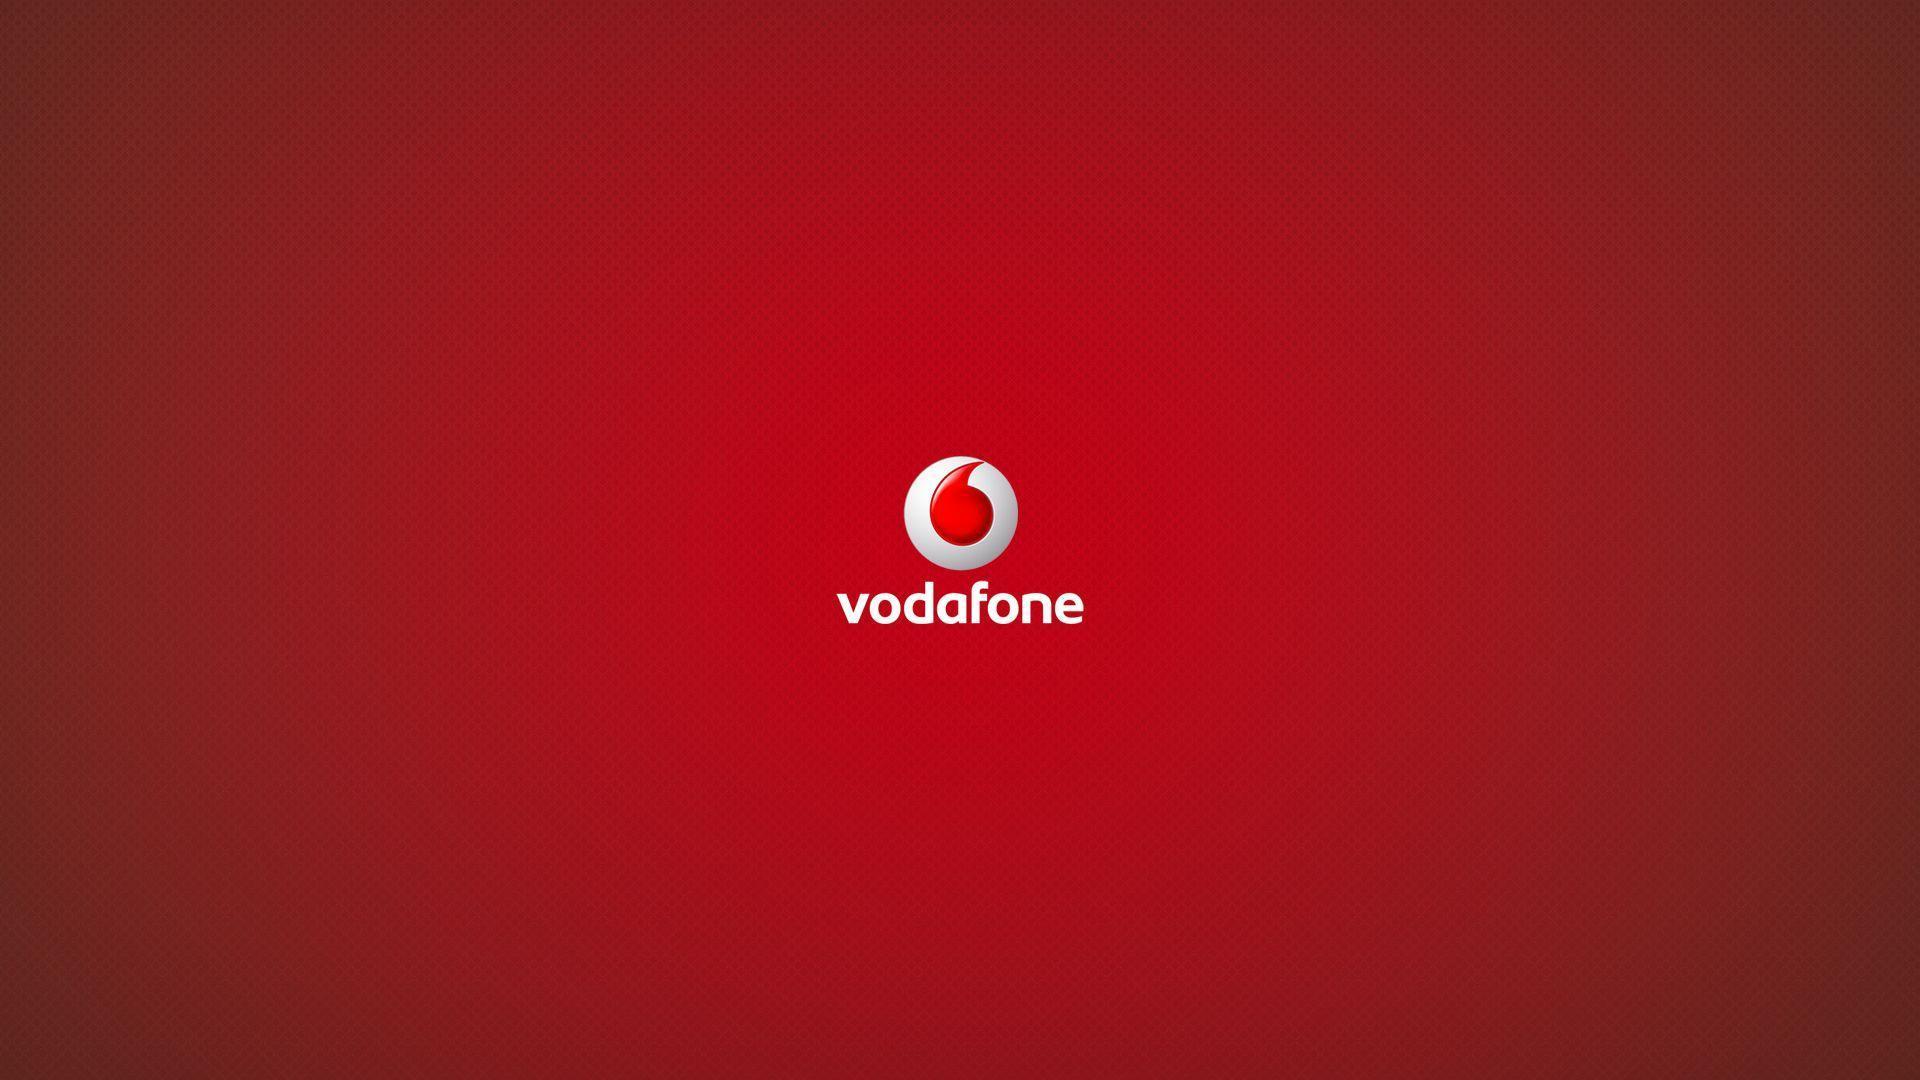 Vodafone Wallpapers - Wallpaper Cave